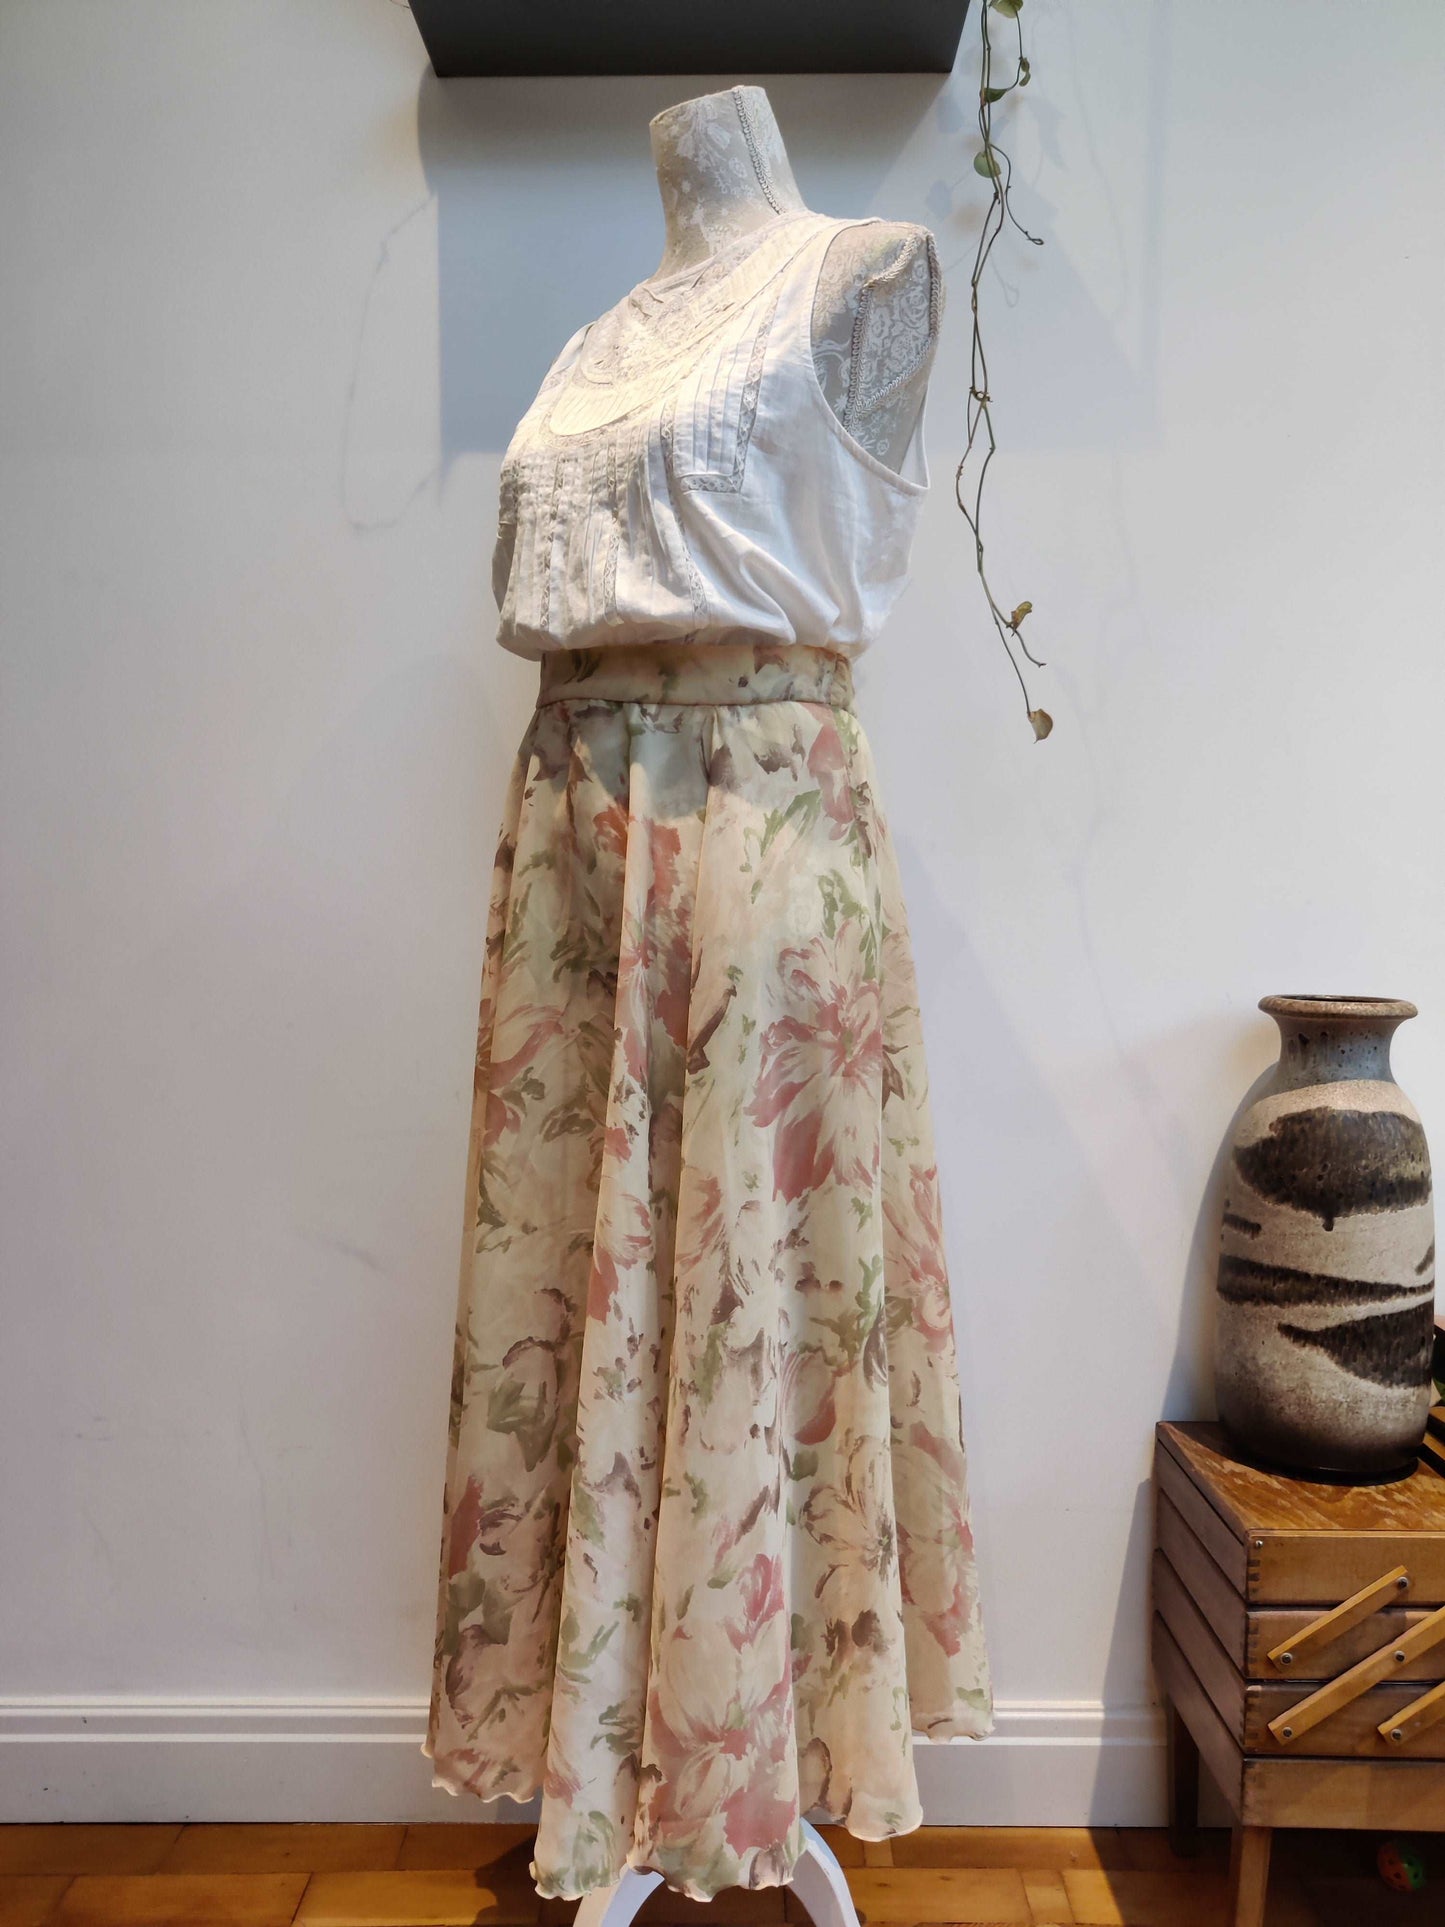 Pretty floral vintage skirt.